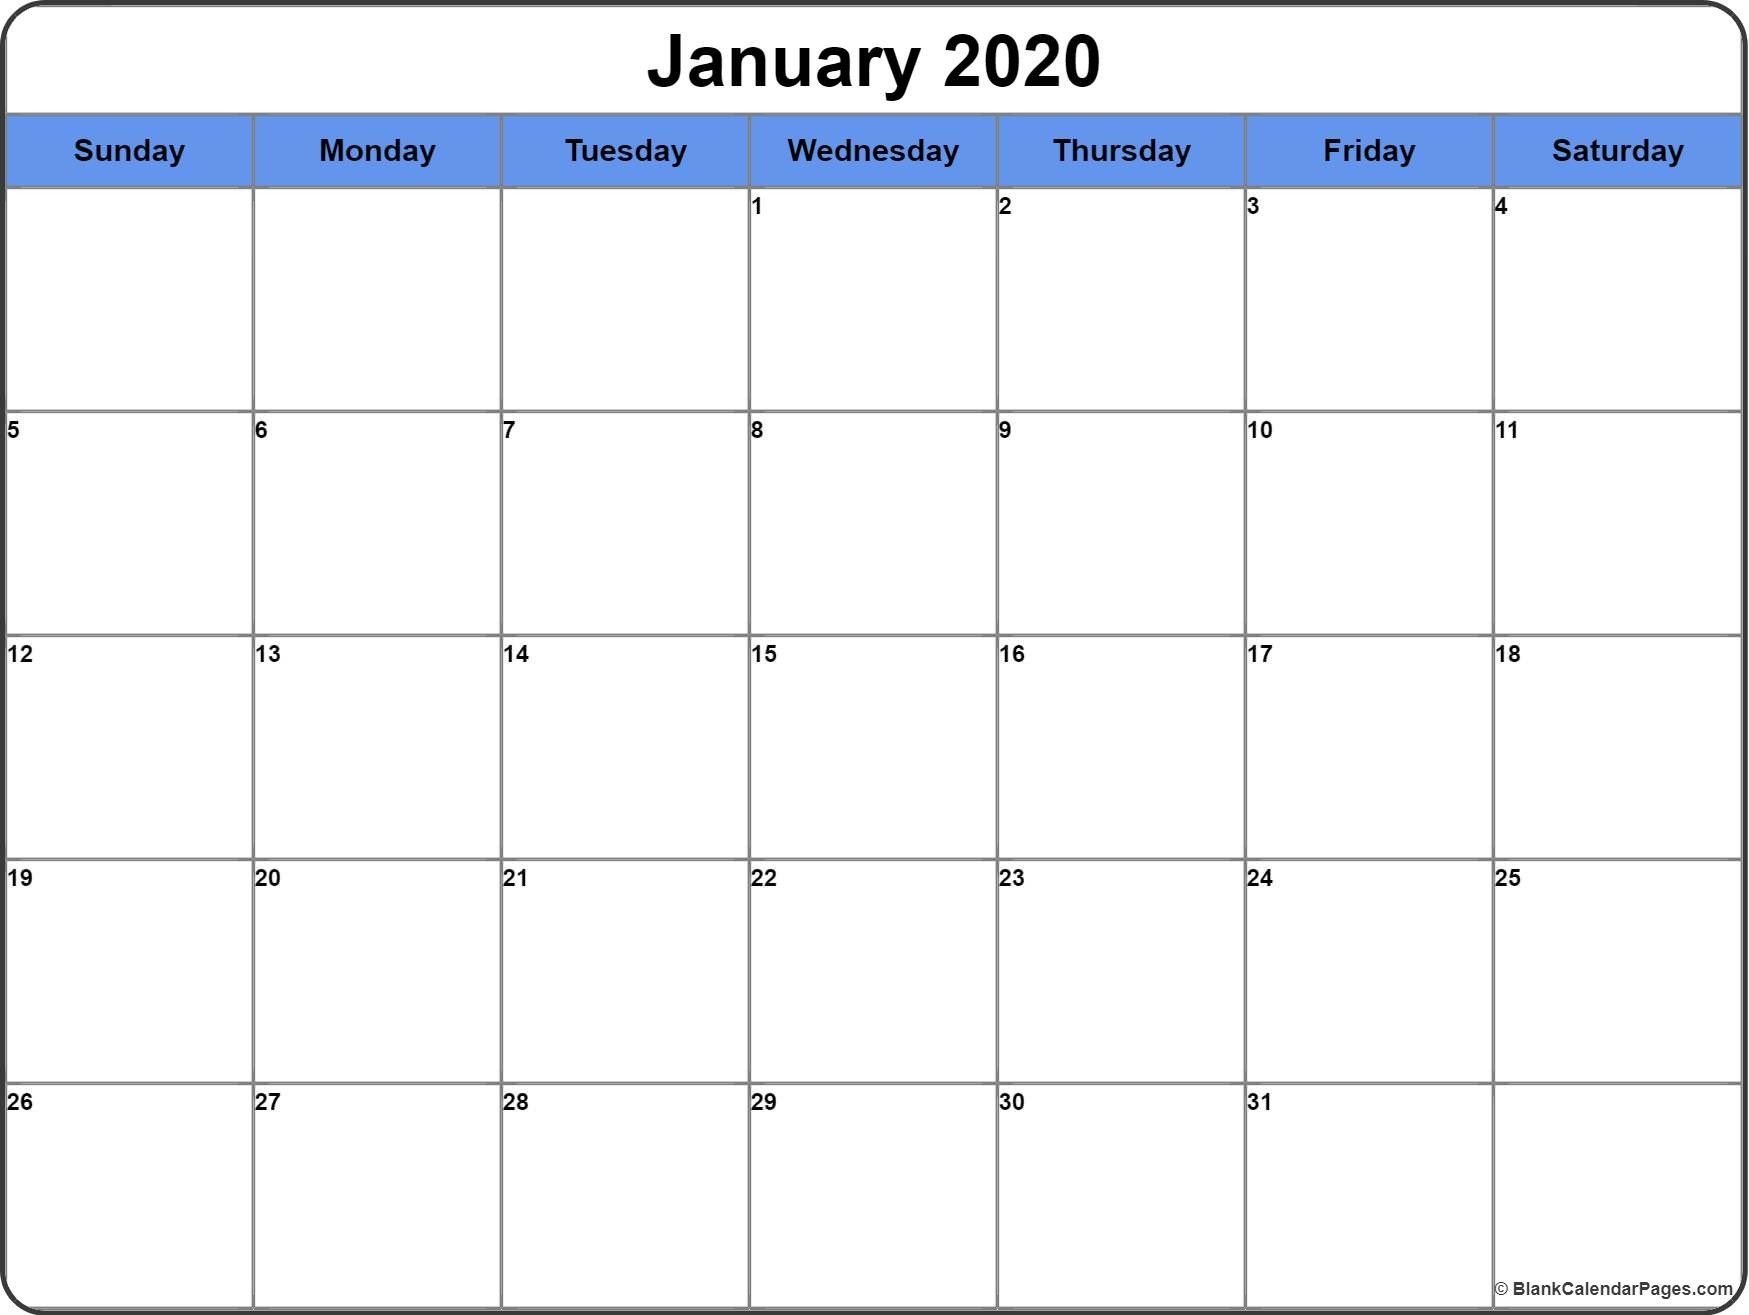 January 2020 Calendar | Free Printable Monthly Calendars-January 2020 Calendar Imom